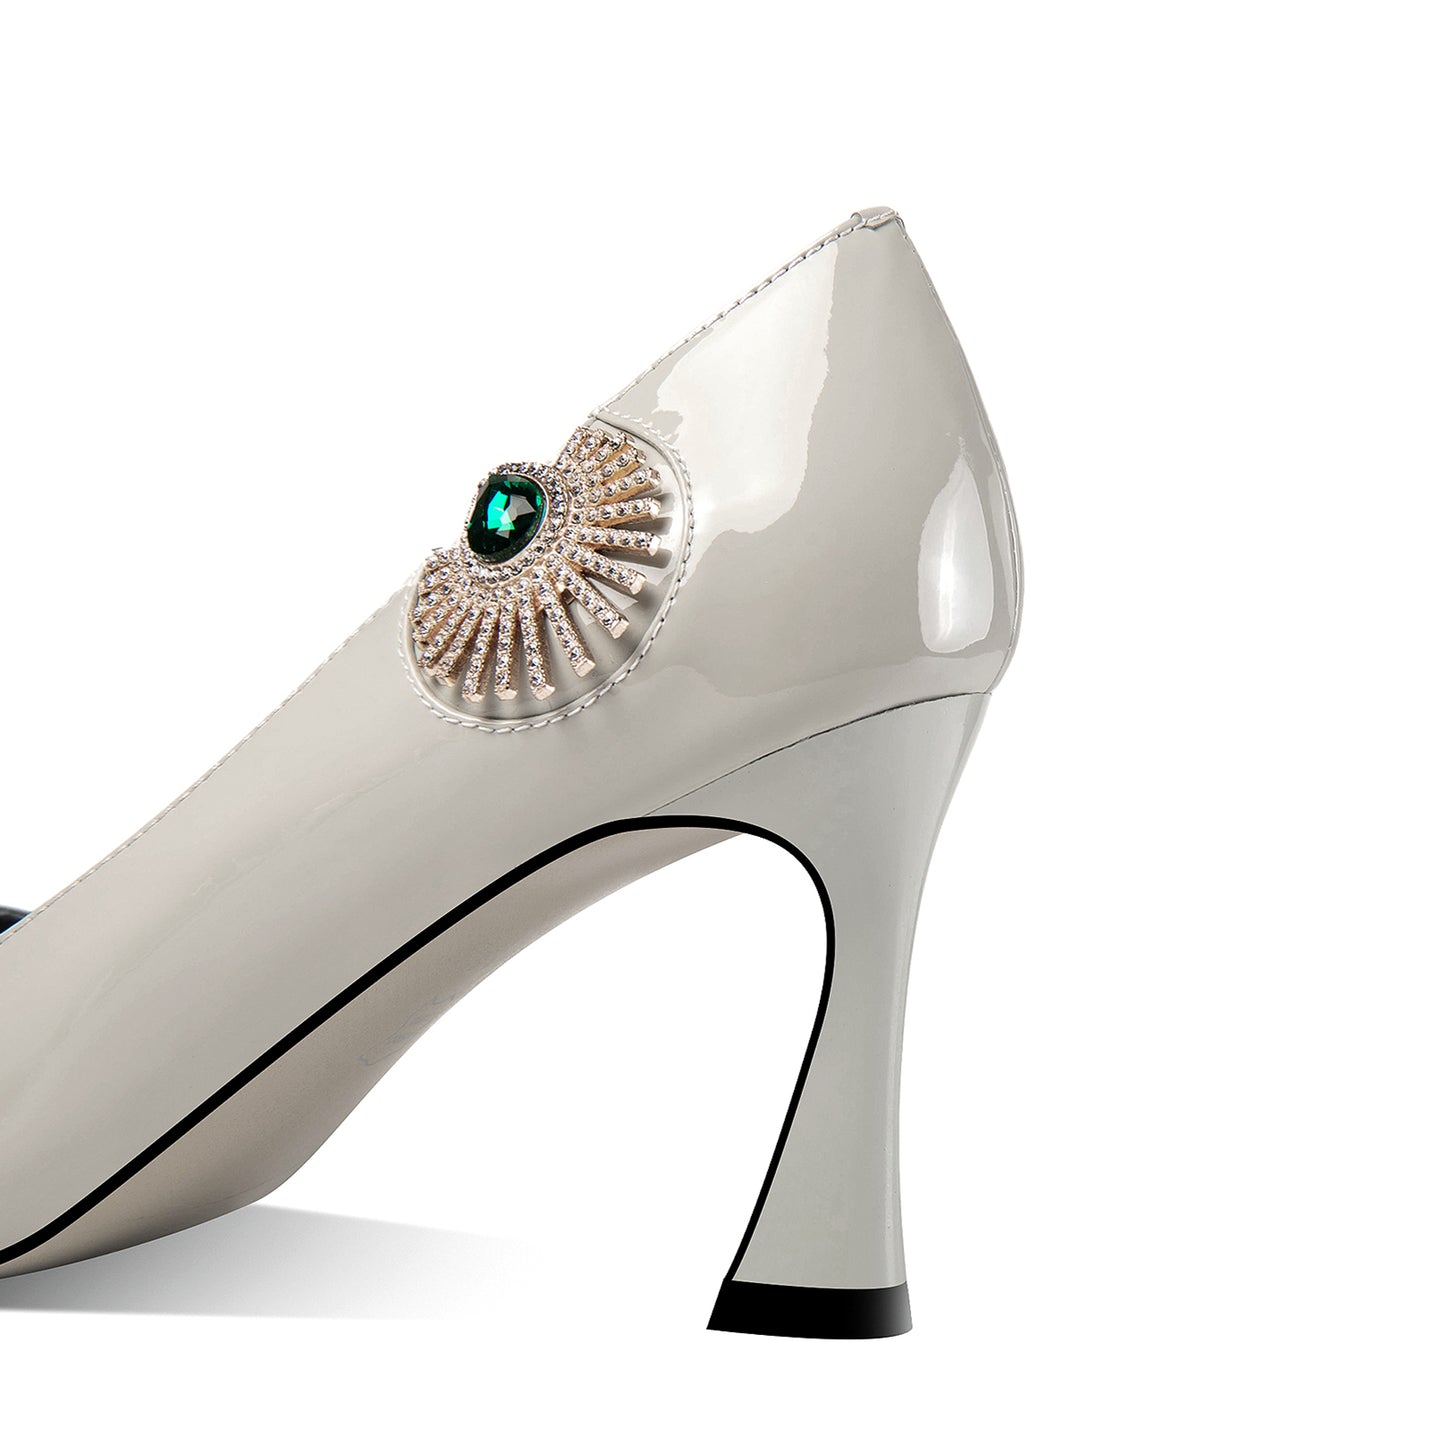 TinaCus Patent Leather Women's Handmade Pointed Toe Unique Glitter Rhinestone Emerald Crystal Design High Heel Slip On Pumps